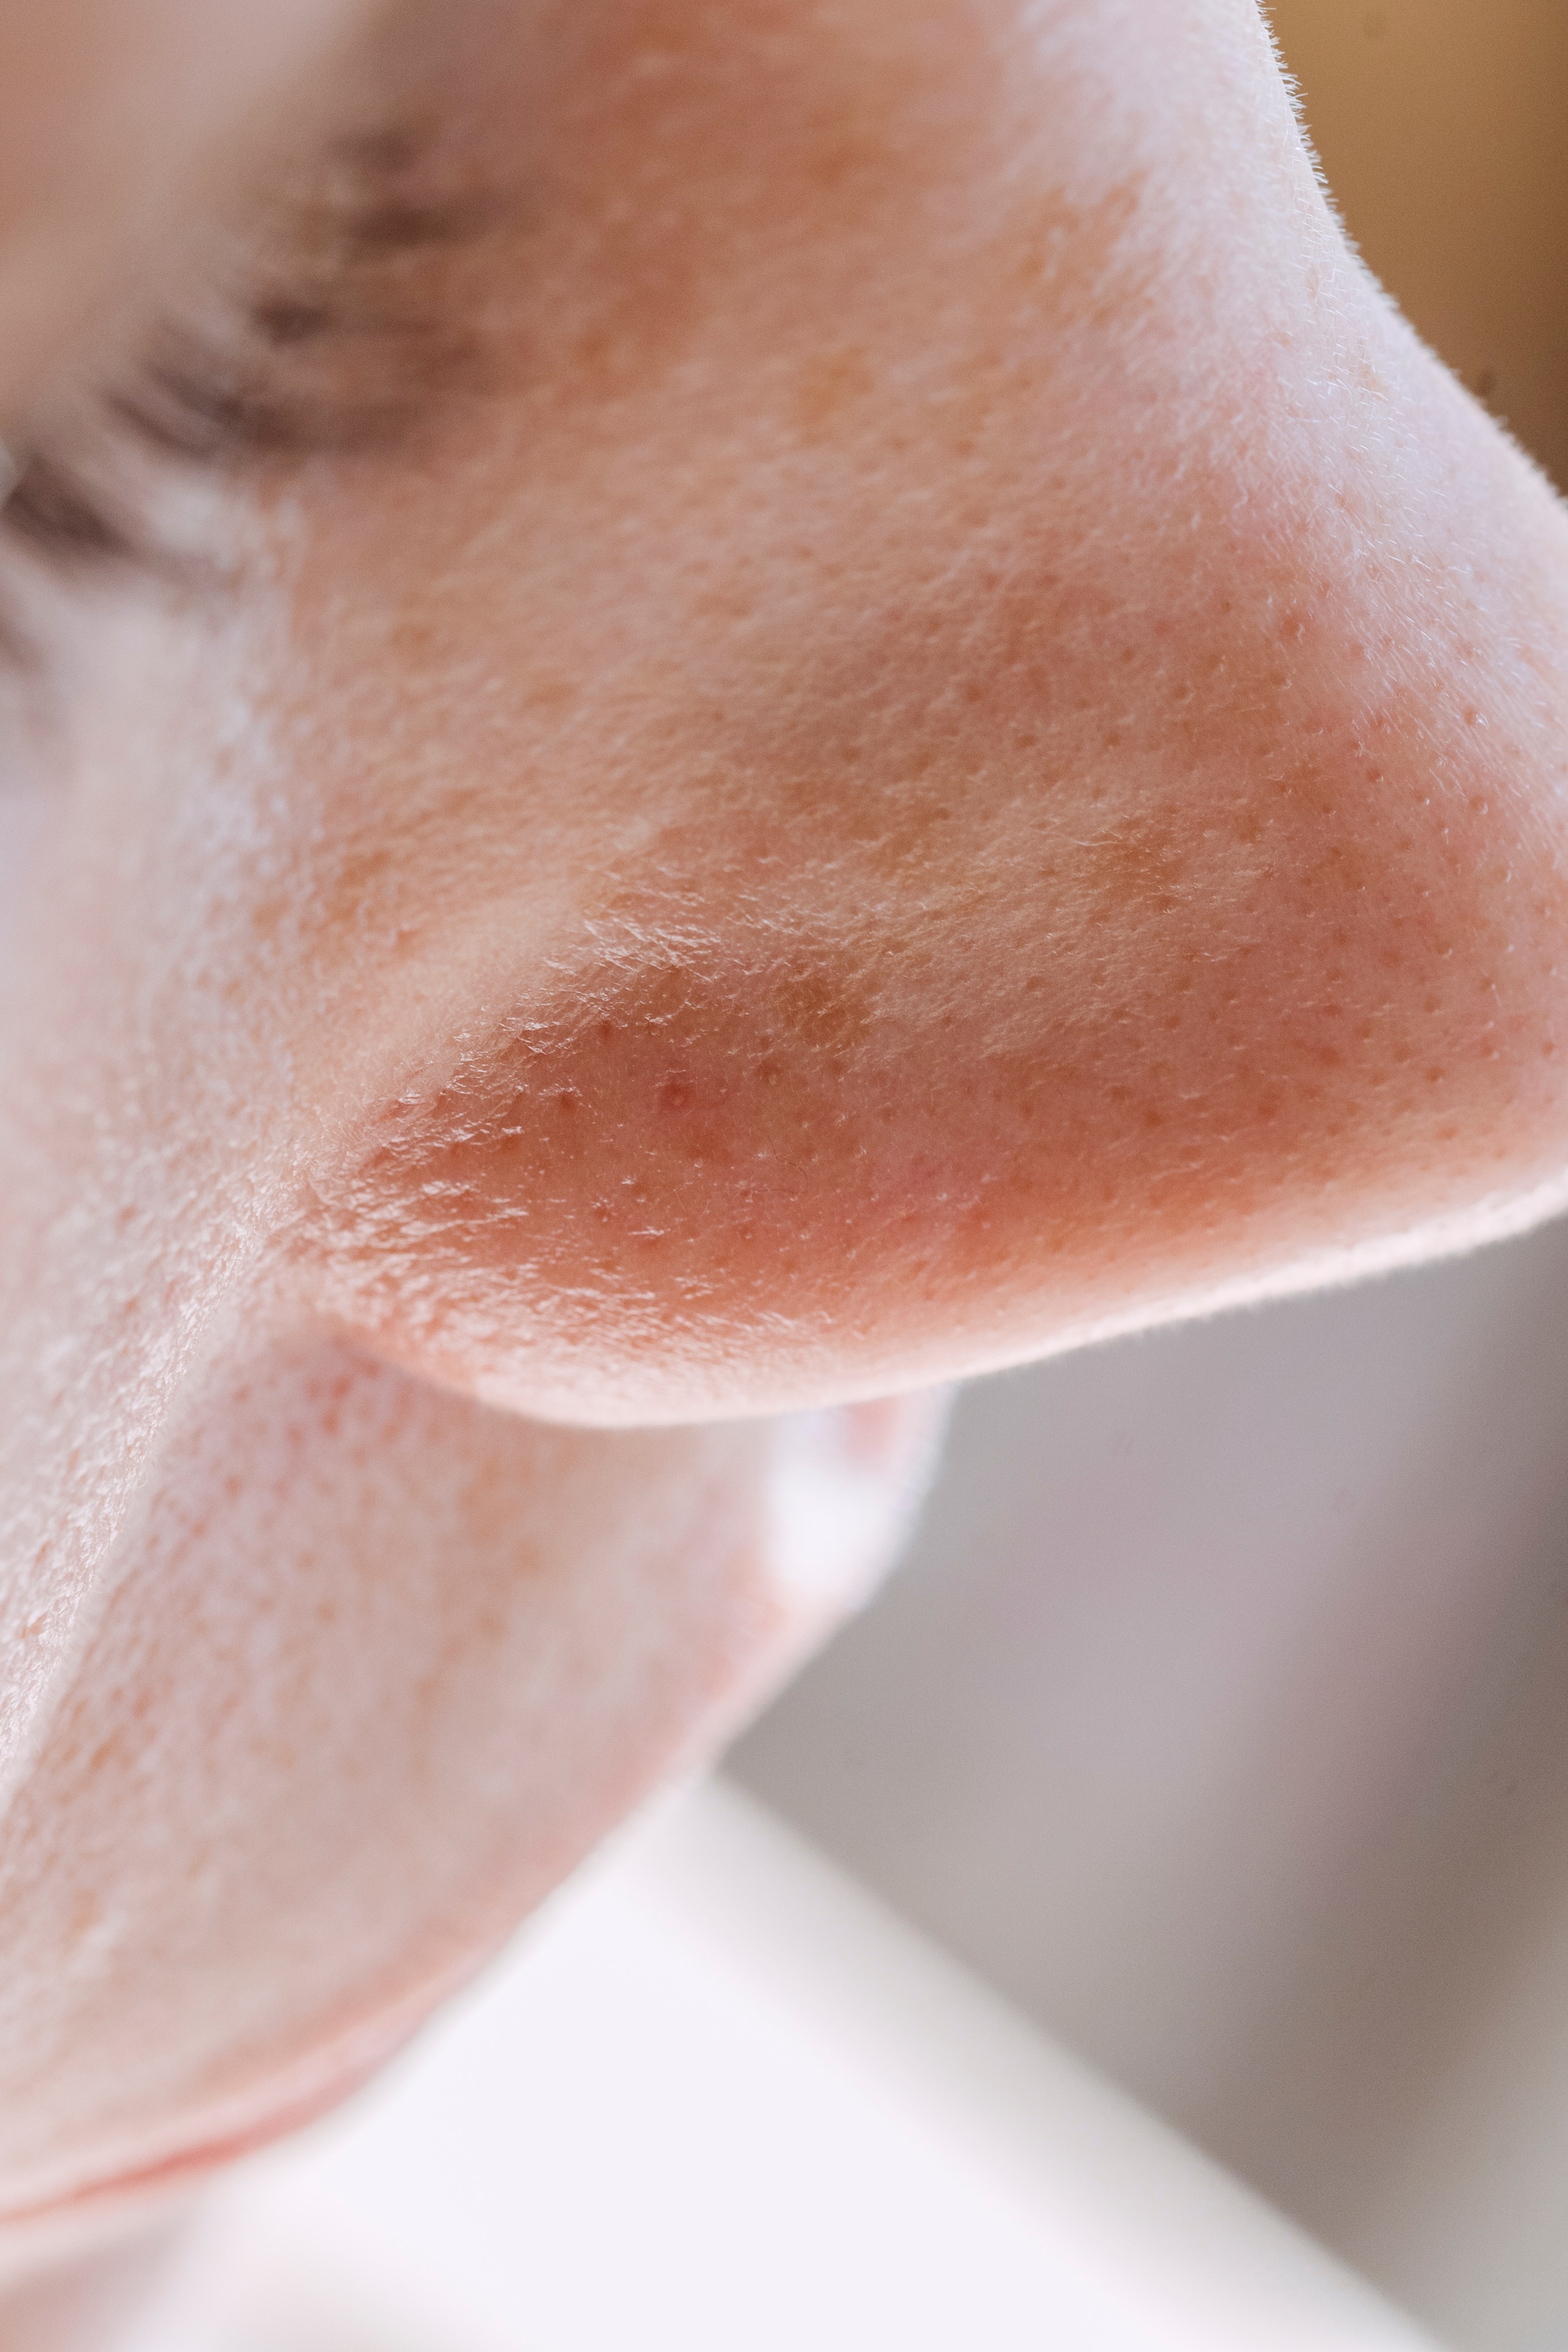 How to get rid of nose pores?